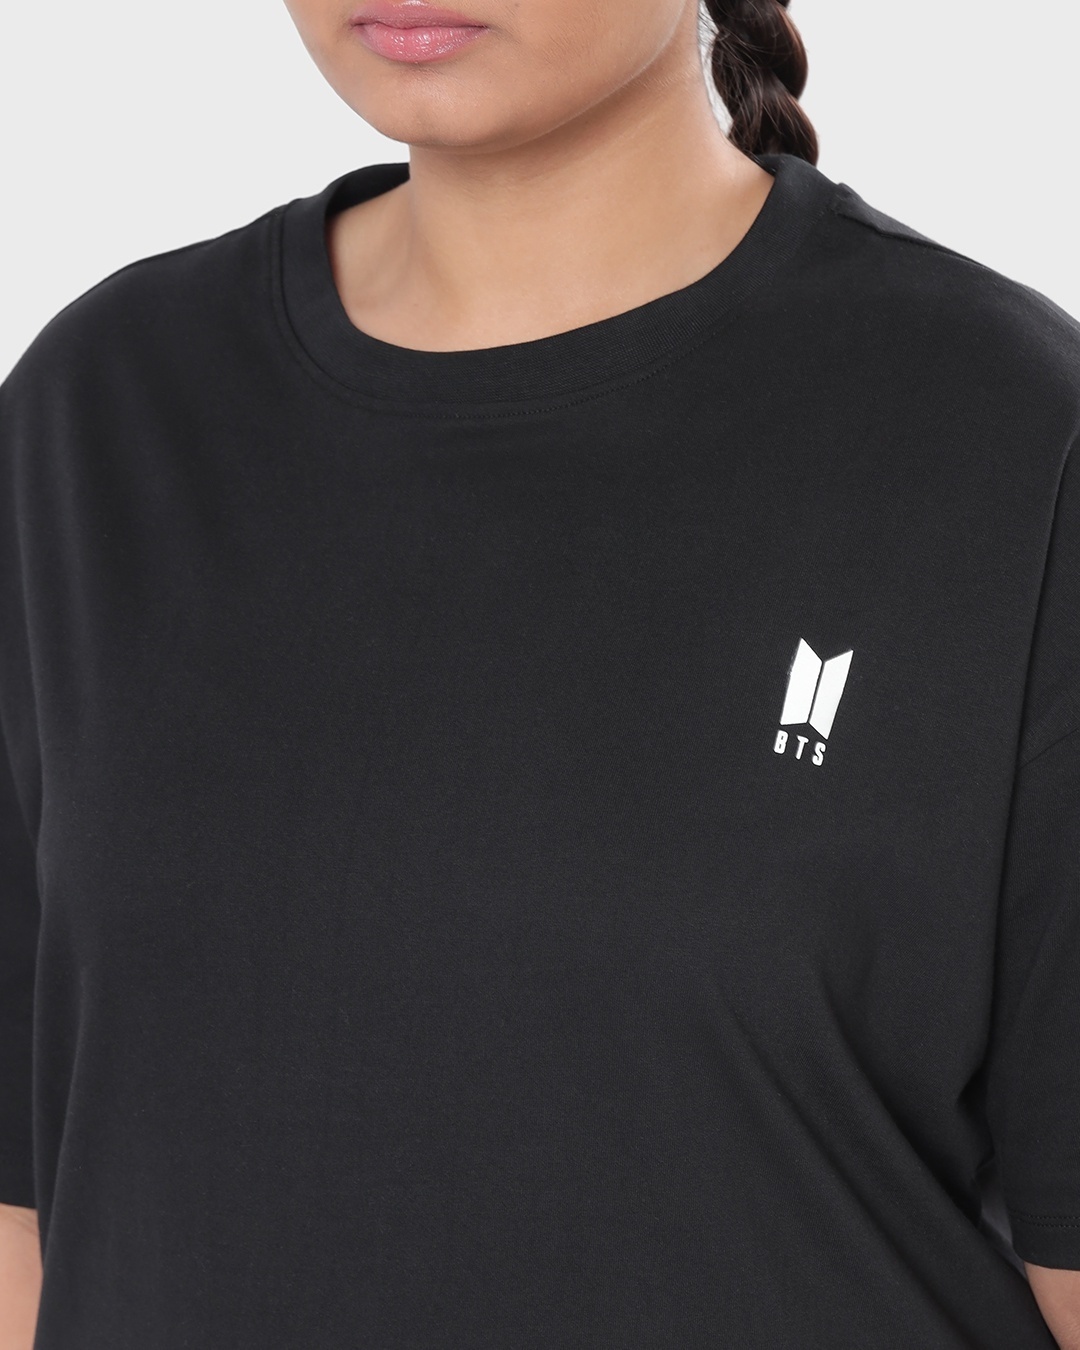 Shop Women's Black BTS Seoul Typography Plus Size Oversized T-shirt